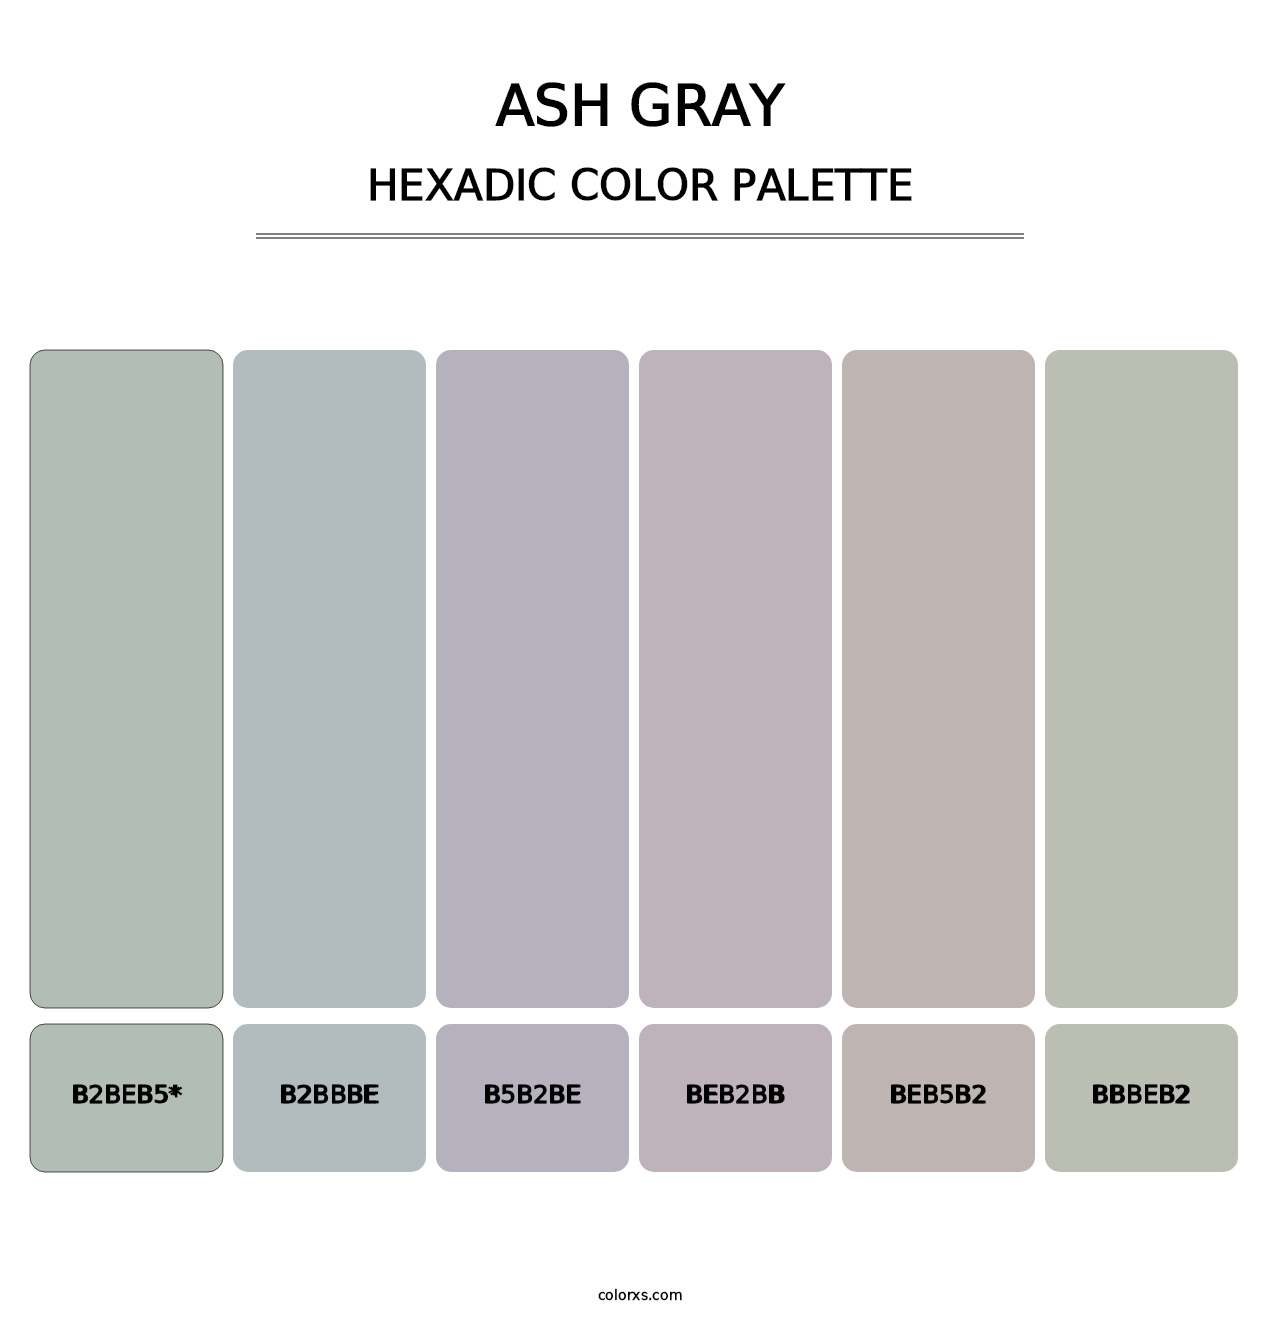 Ash Gray - Hexadic Color Palette